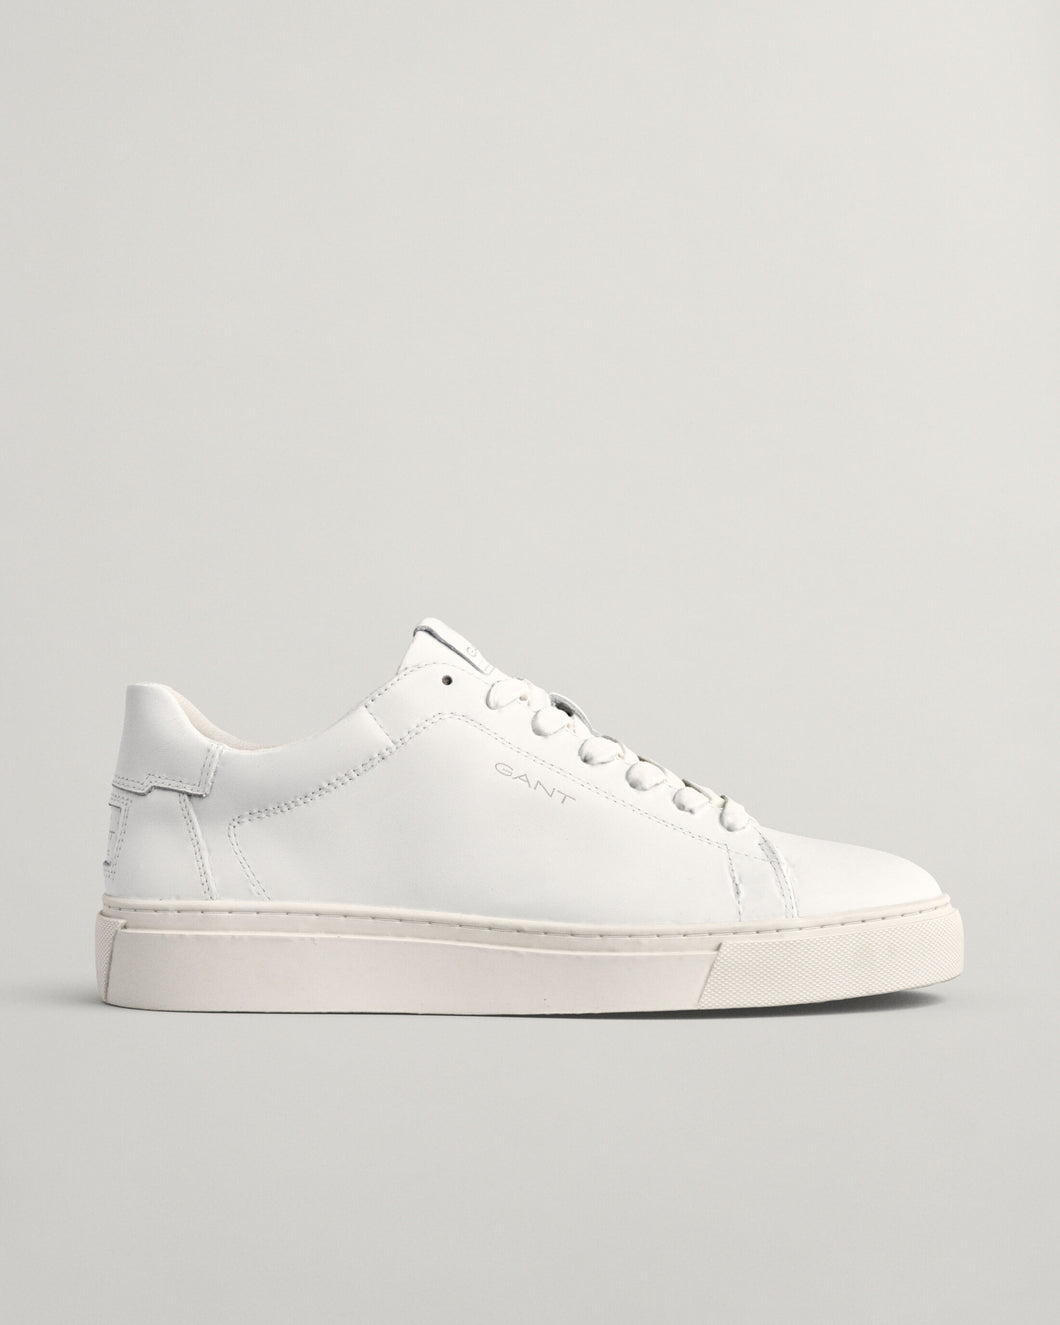 GANT - Mc Julien Shoes, White/White Leather Brian